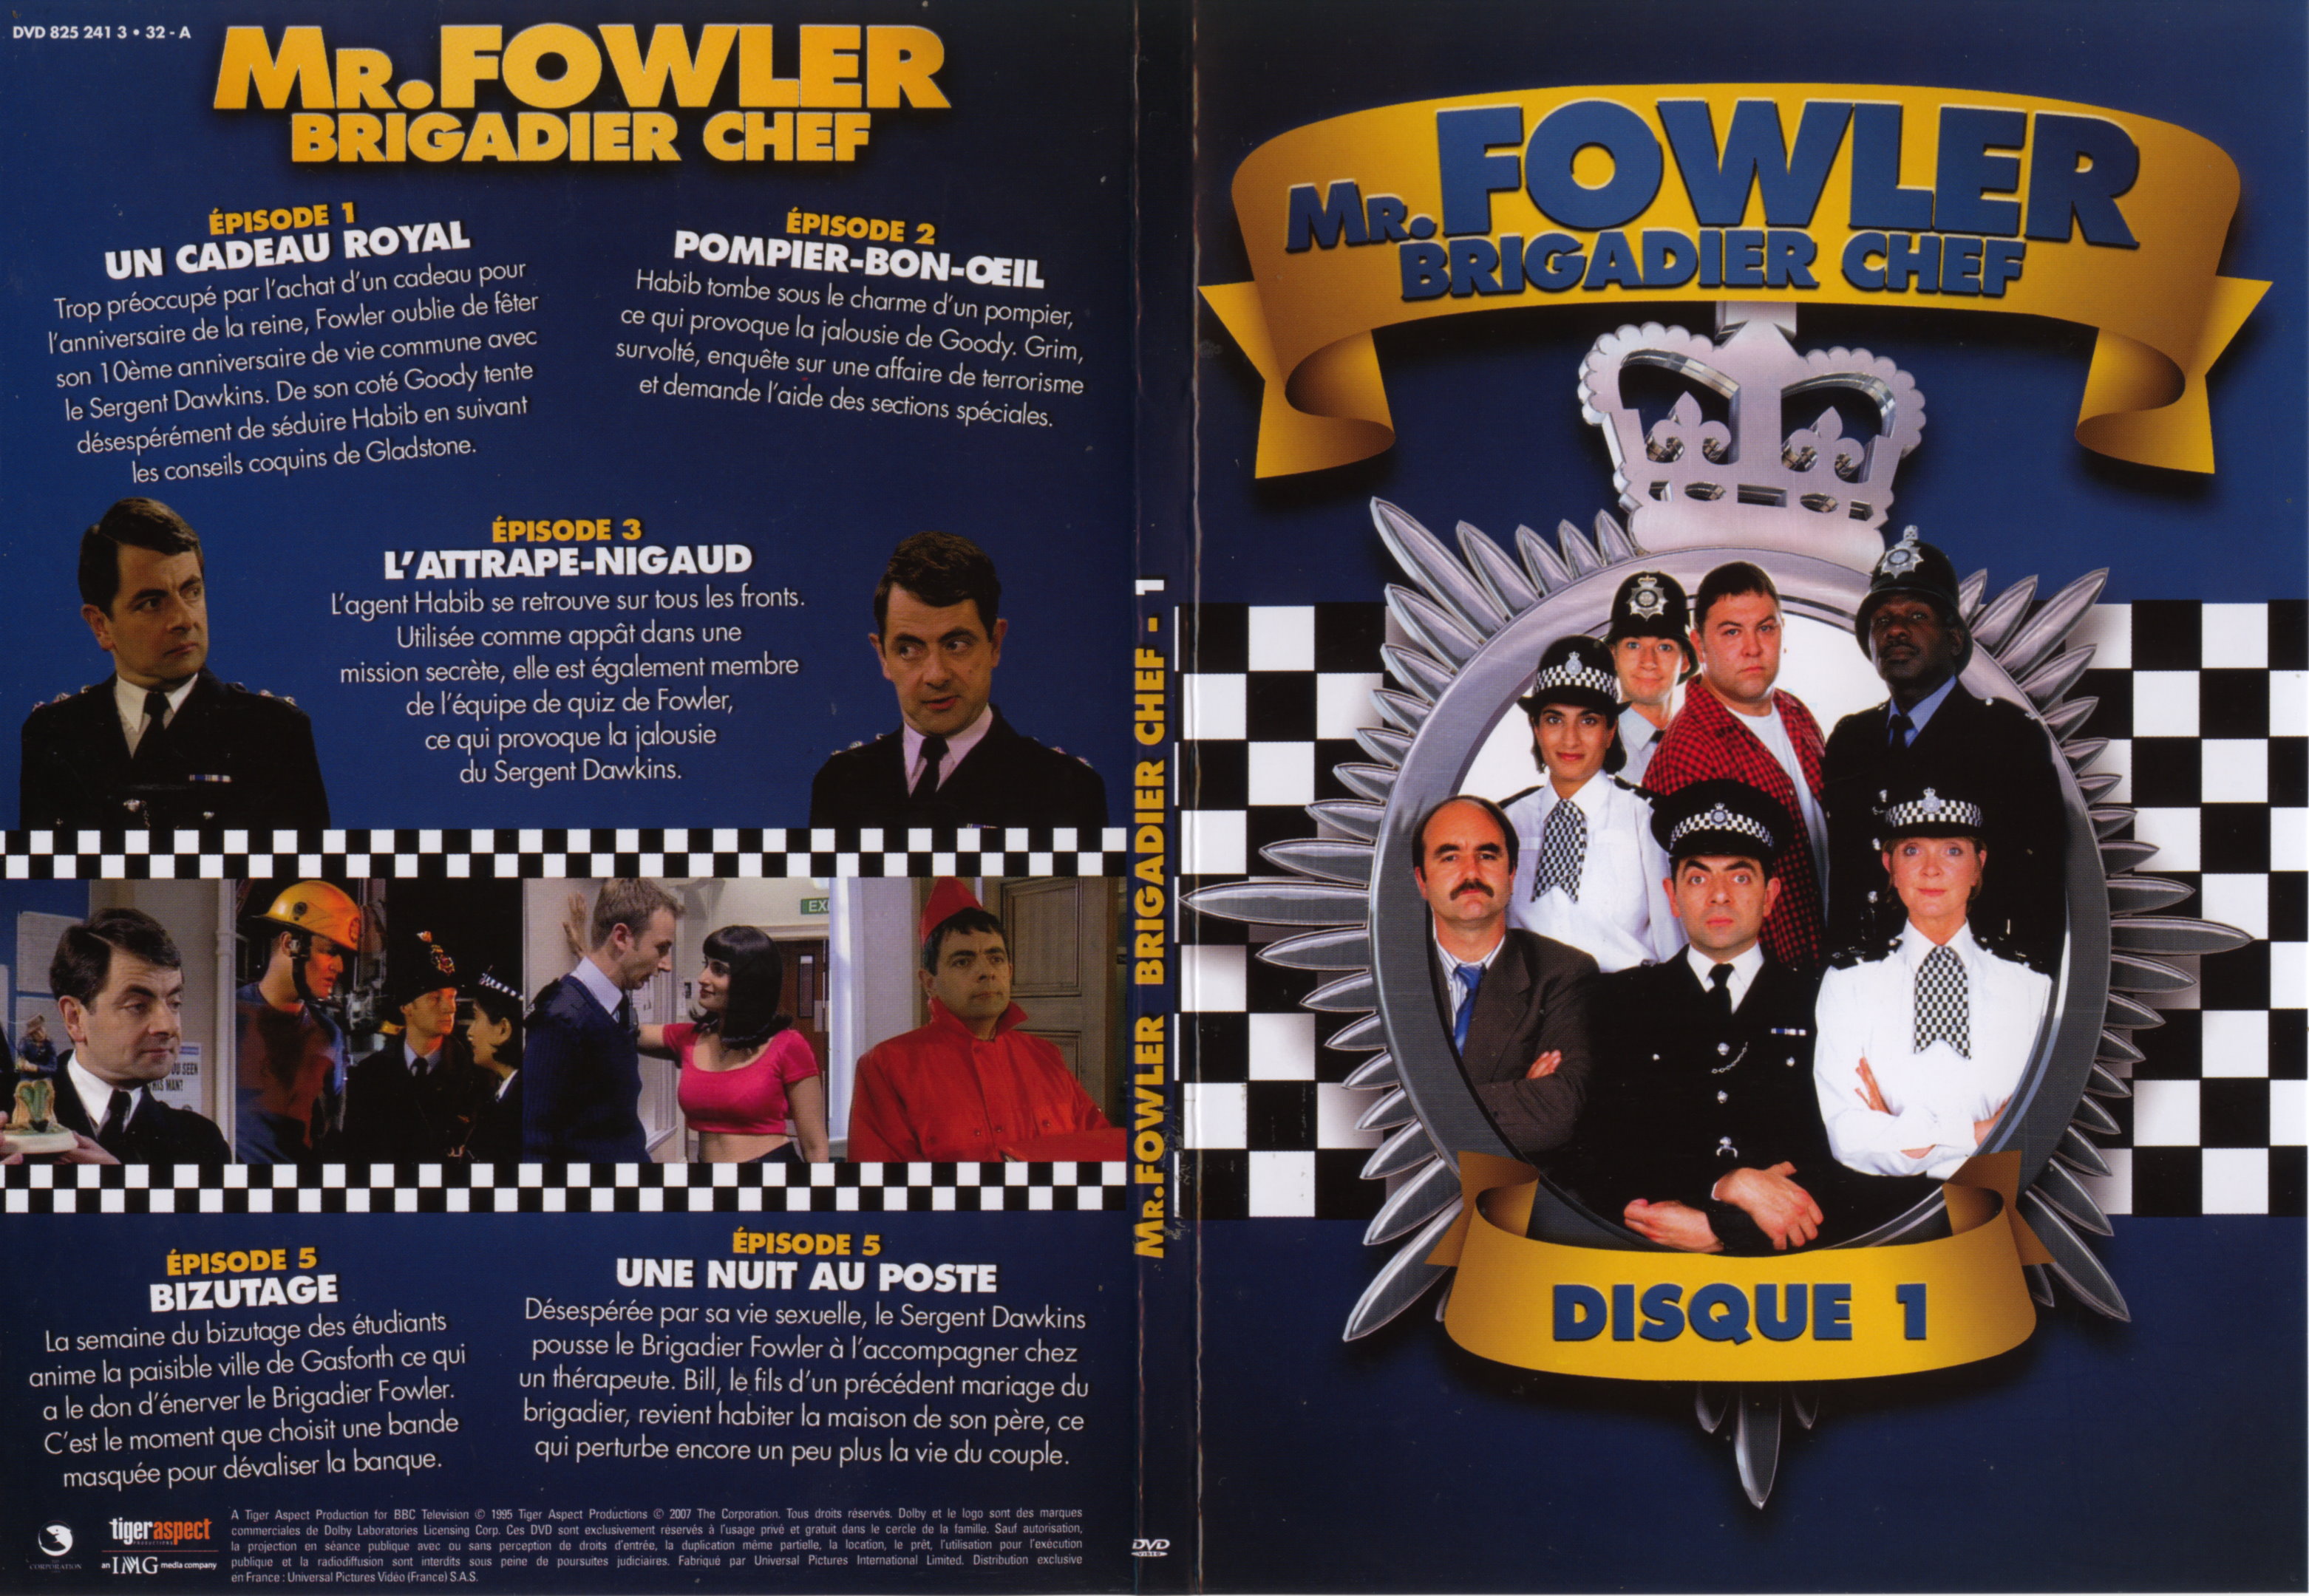 Jaquette DVD Mr Fowler brigadier chef DVD 1